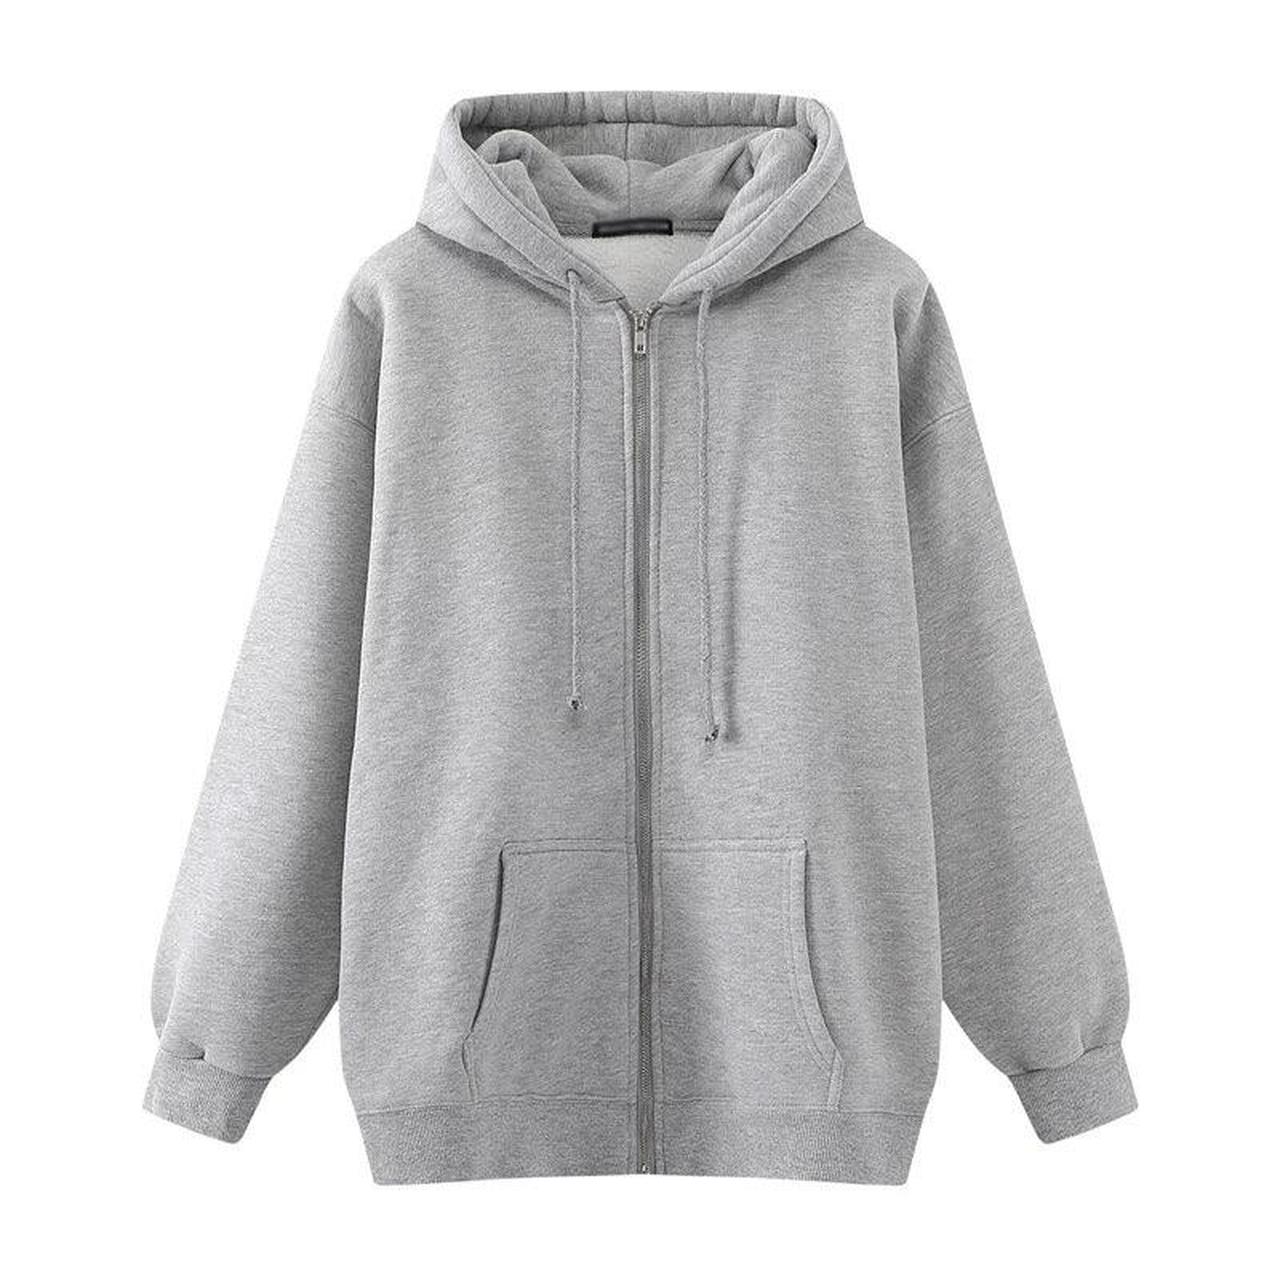 brandy oversized grey hoodie ♡ super brand new ♡... - Depop